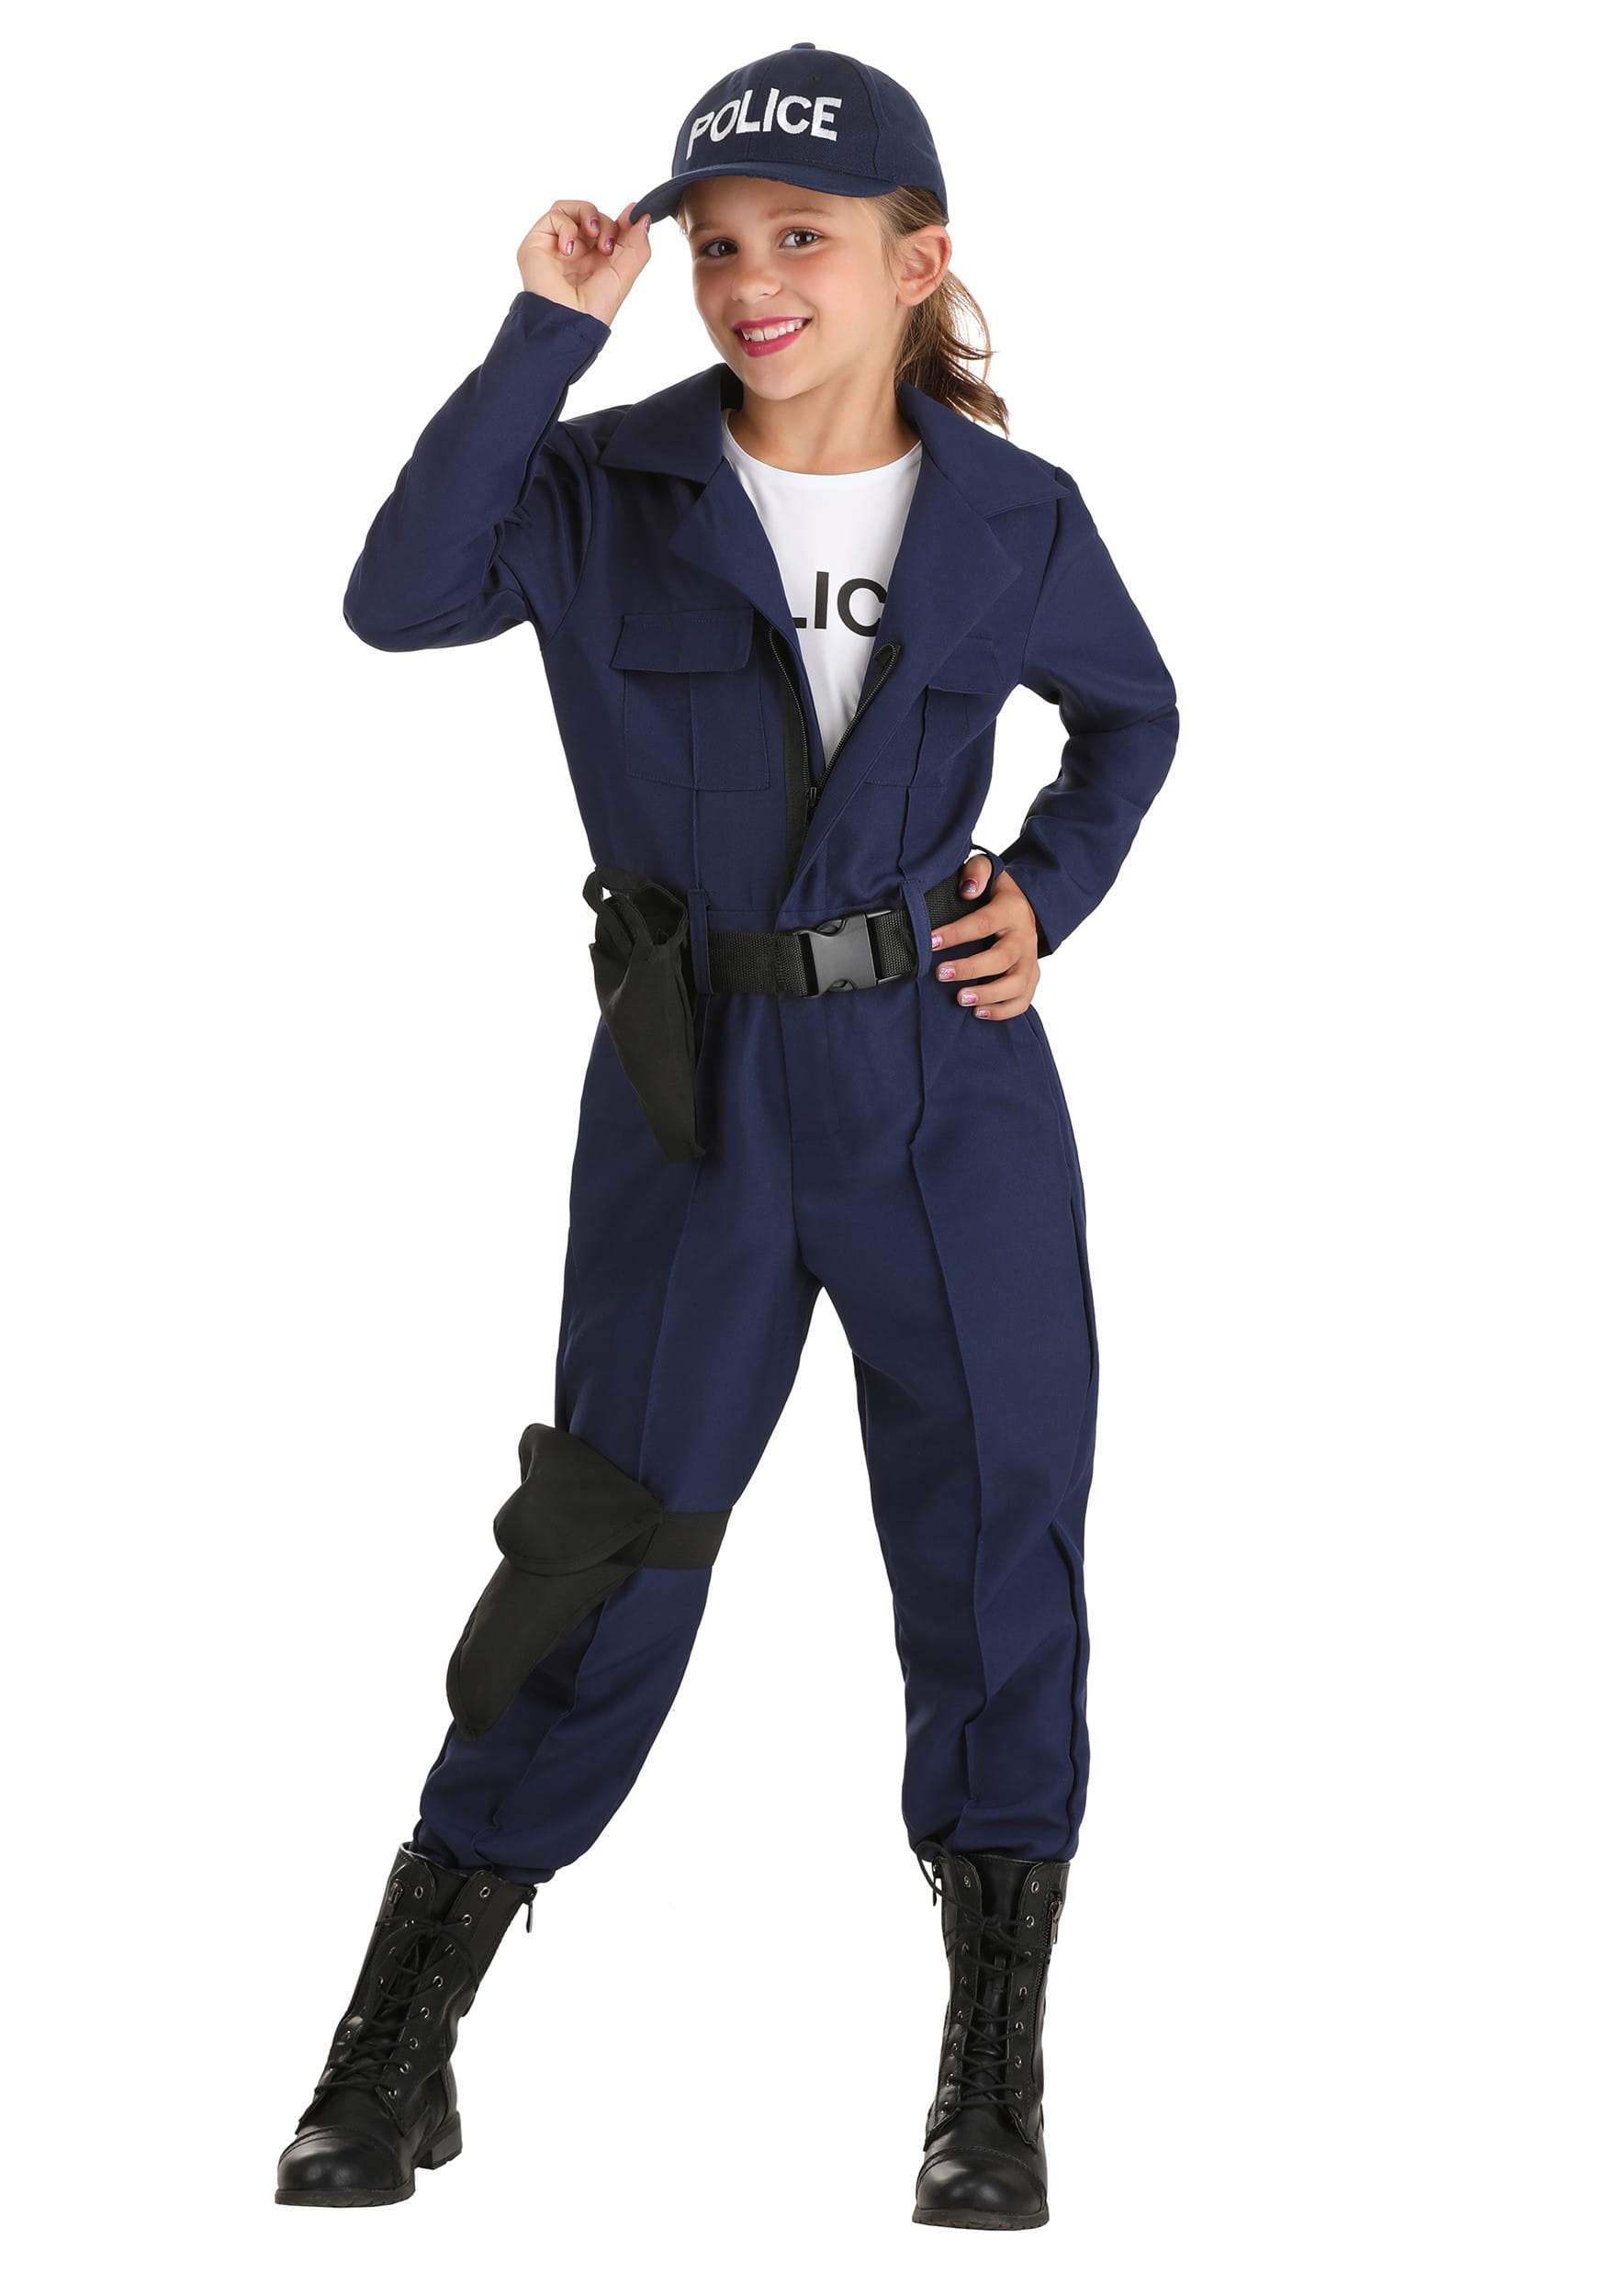 Photos - Fancy Dress FUN Costumes Girl's Tactical Cop Jumpsuit Costume Black/Blue/White